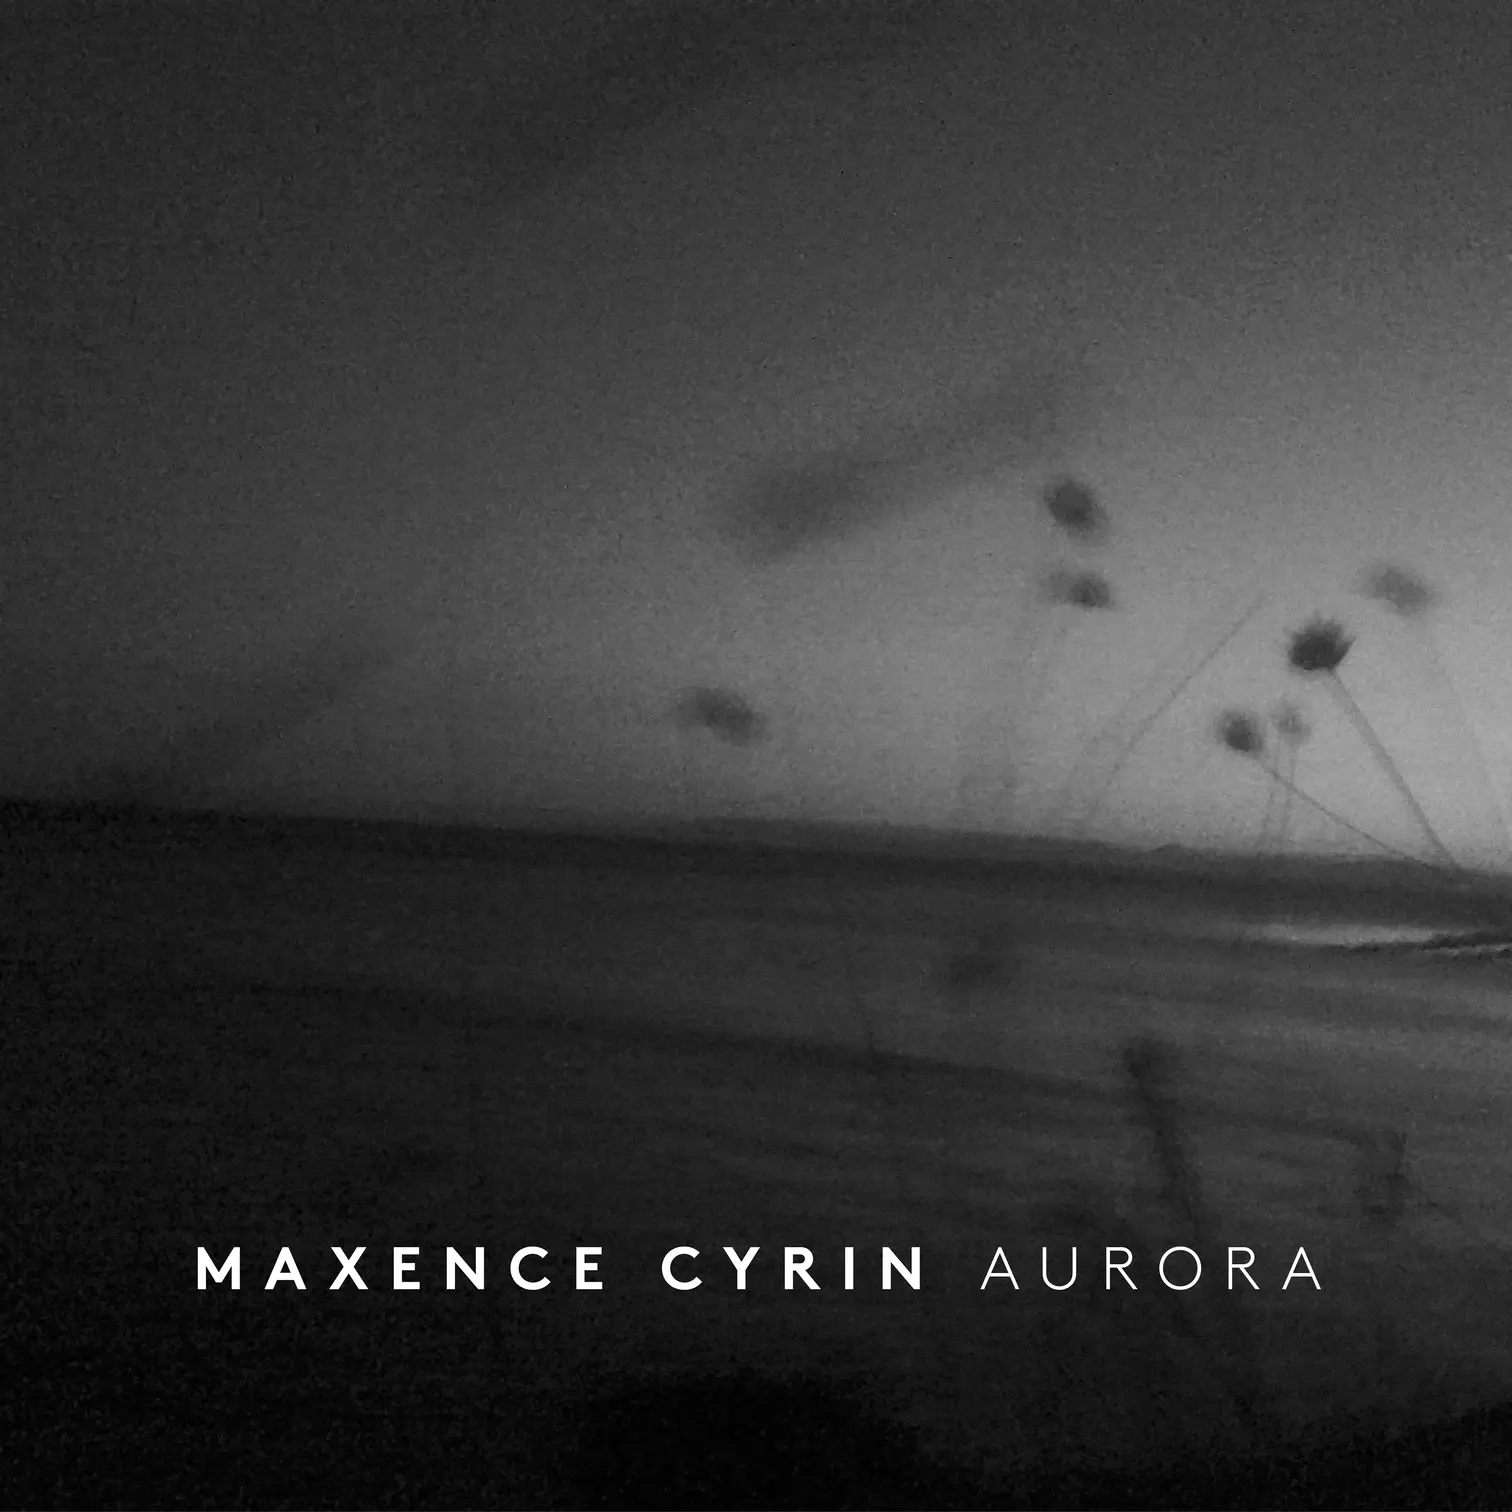 Maxence Cyrin Aurora